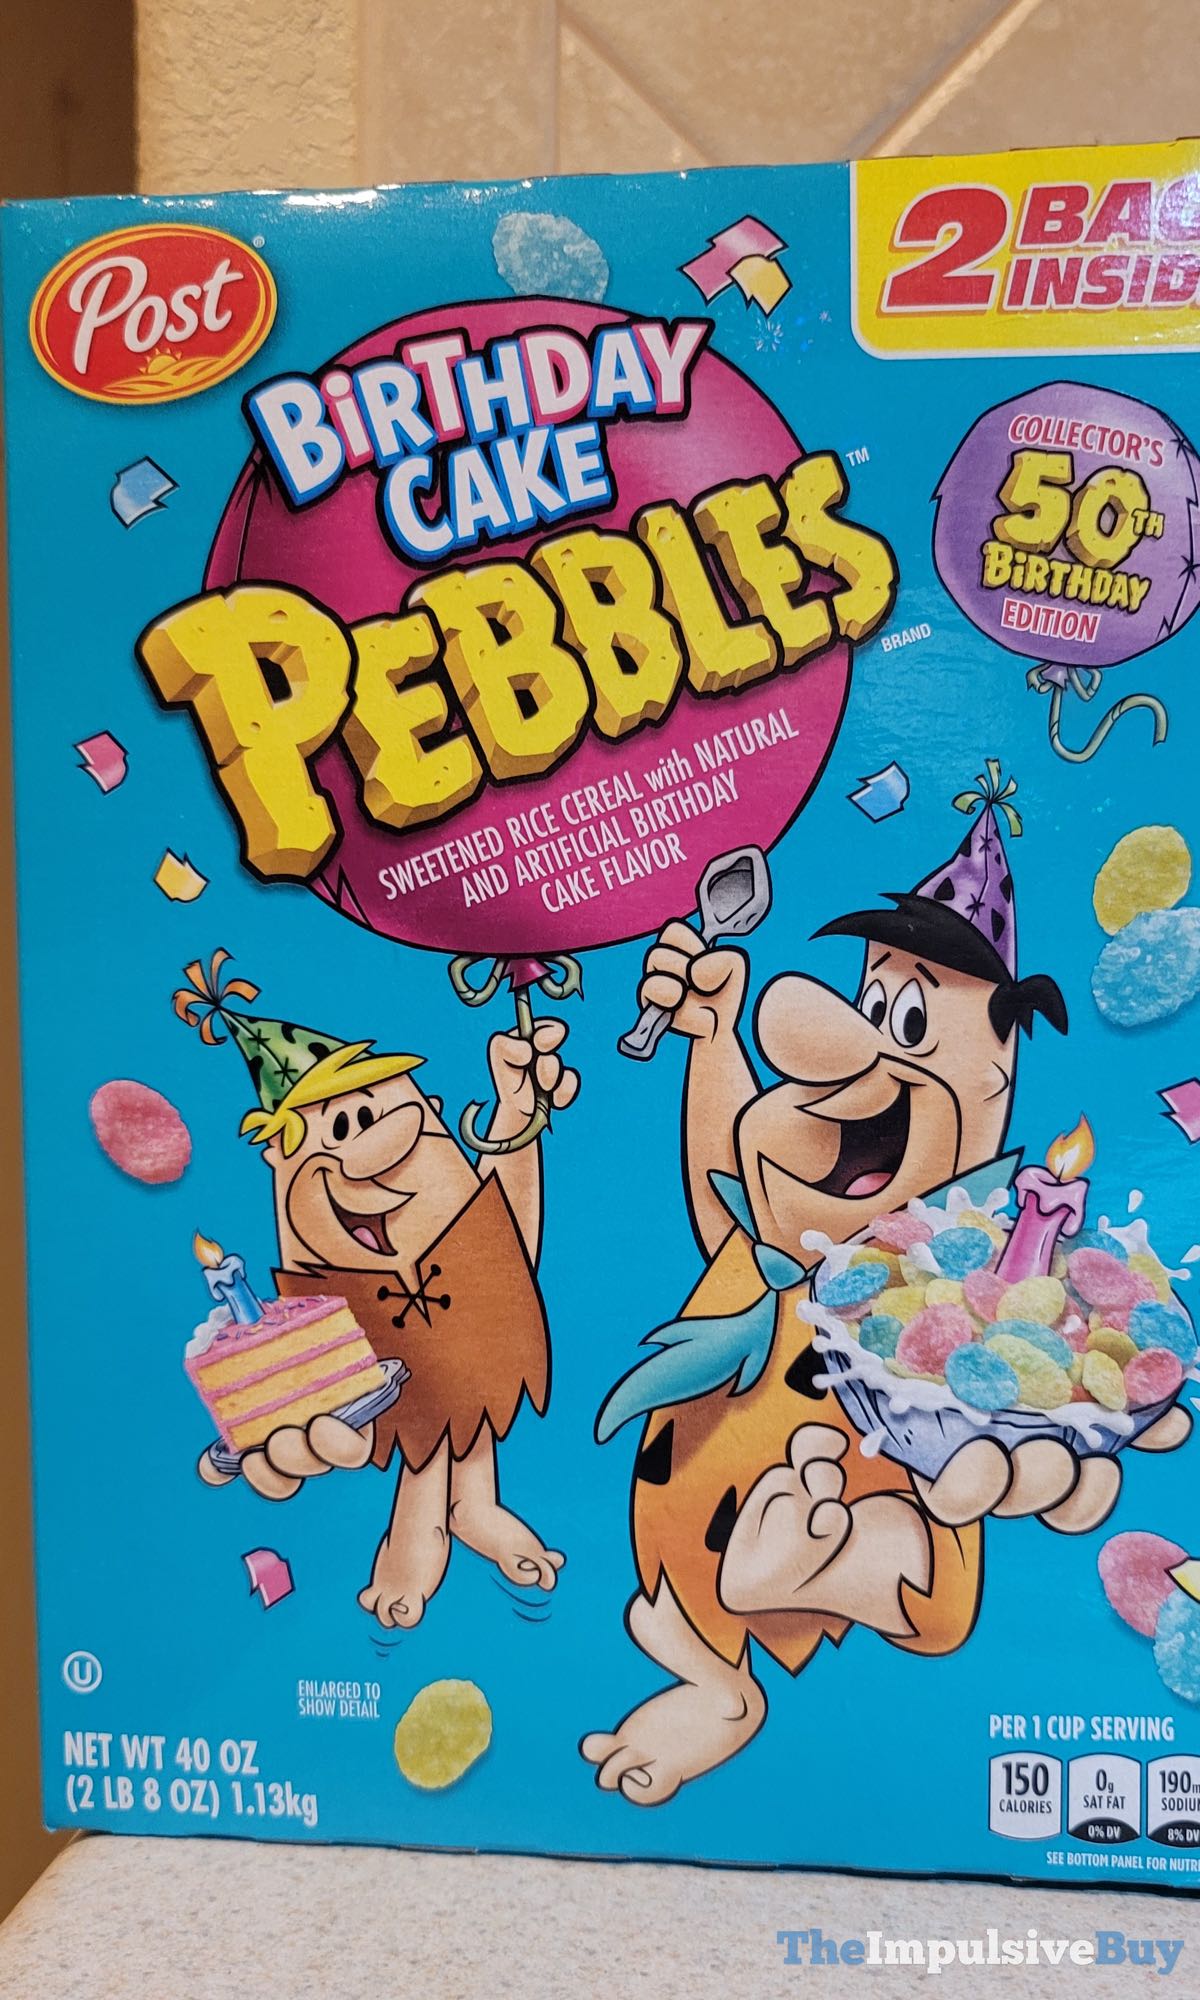 Fruity Pebbles Birthday Cake 50th anniversary Cereal 10 oz Box 